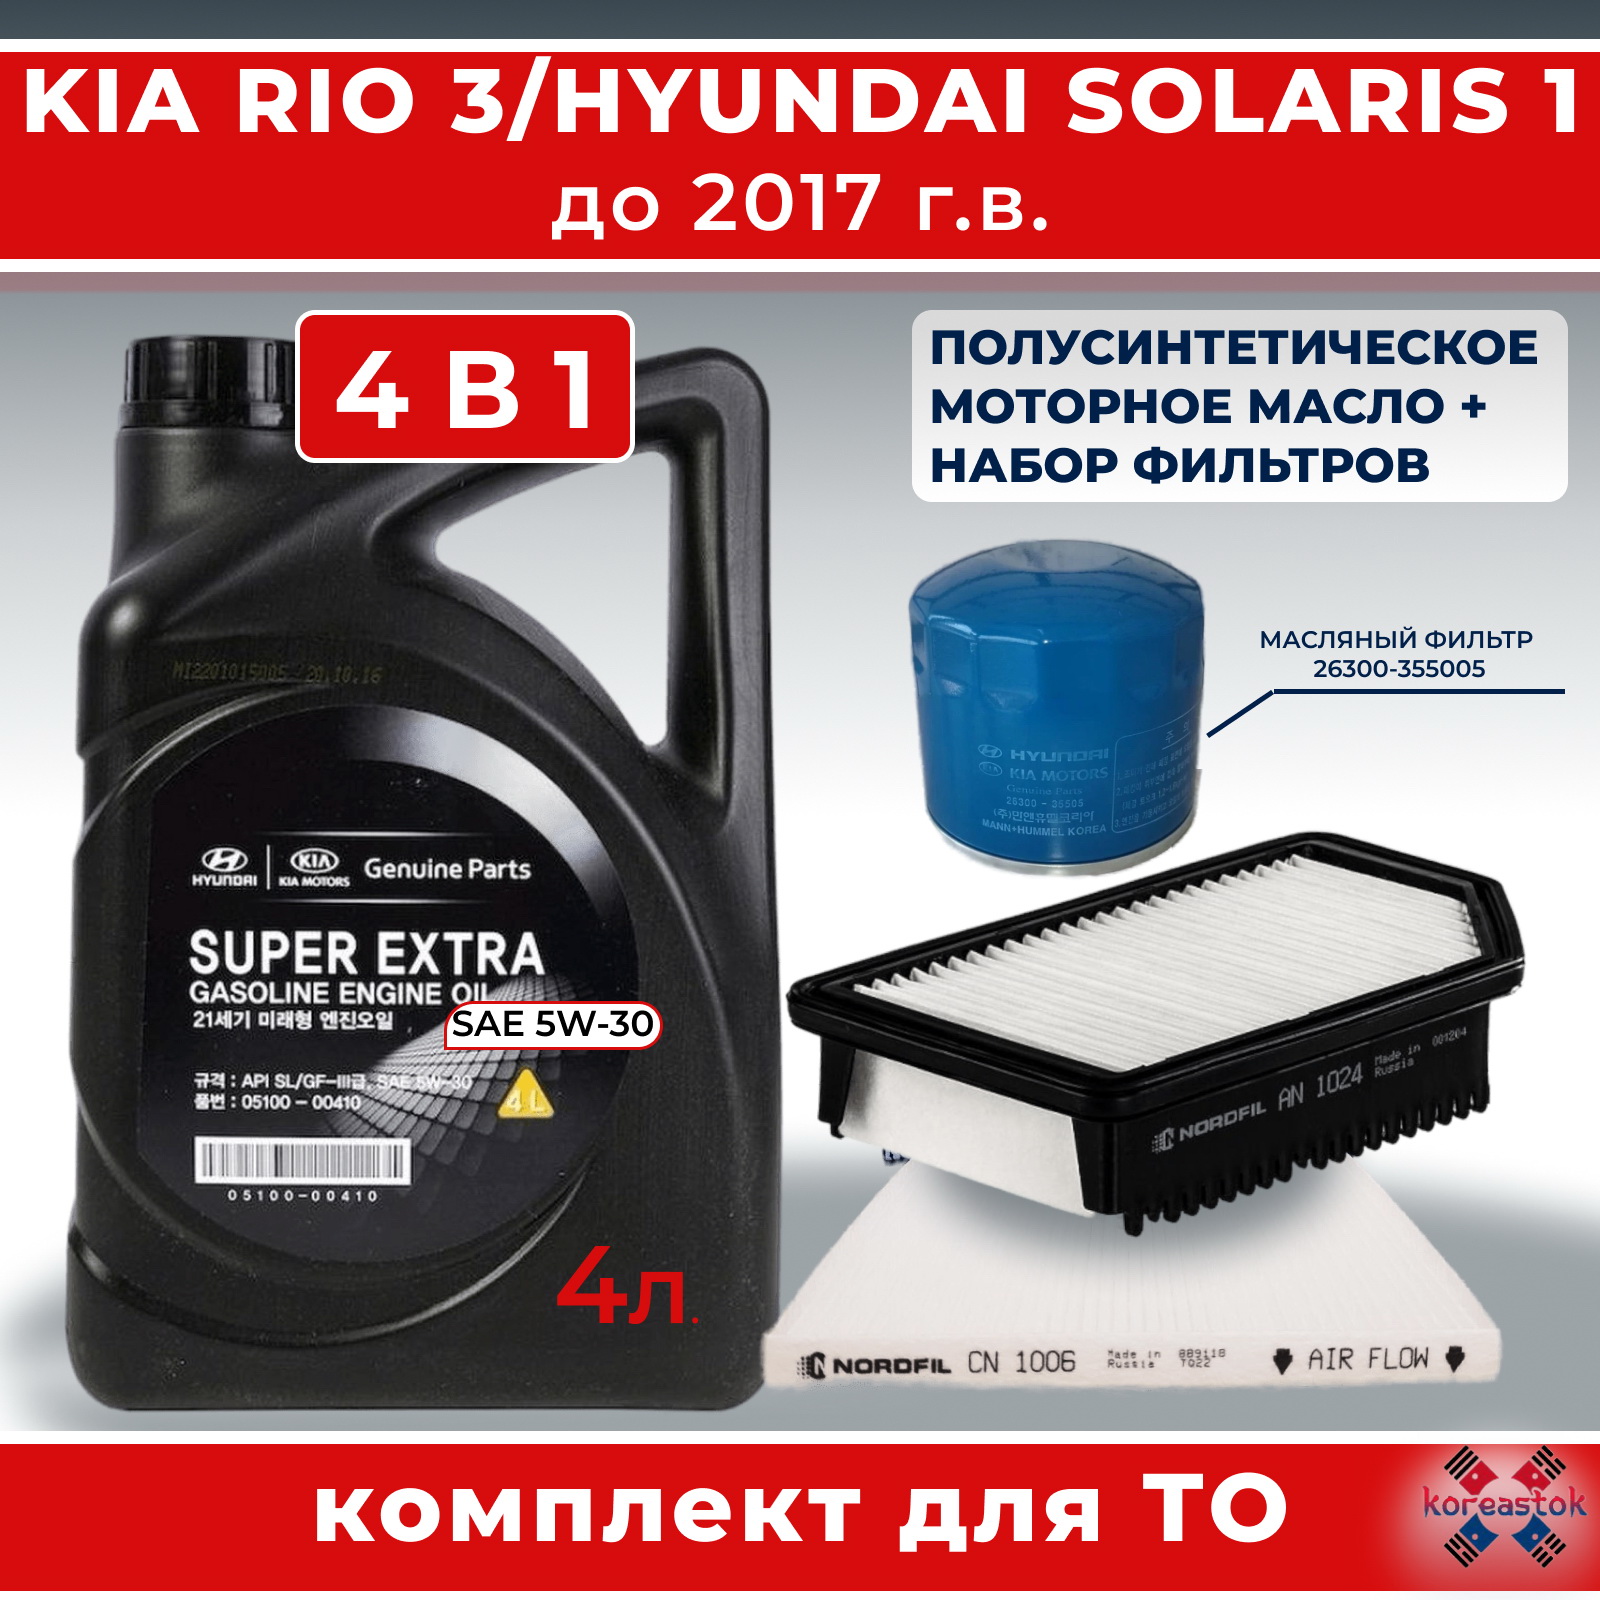 Моторное масло Koreastok 0510000410, 4л+ 3 фильтра для Kia Rio3 Hyundai Solaric1 до 2017г